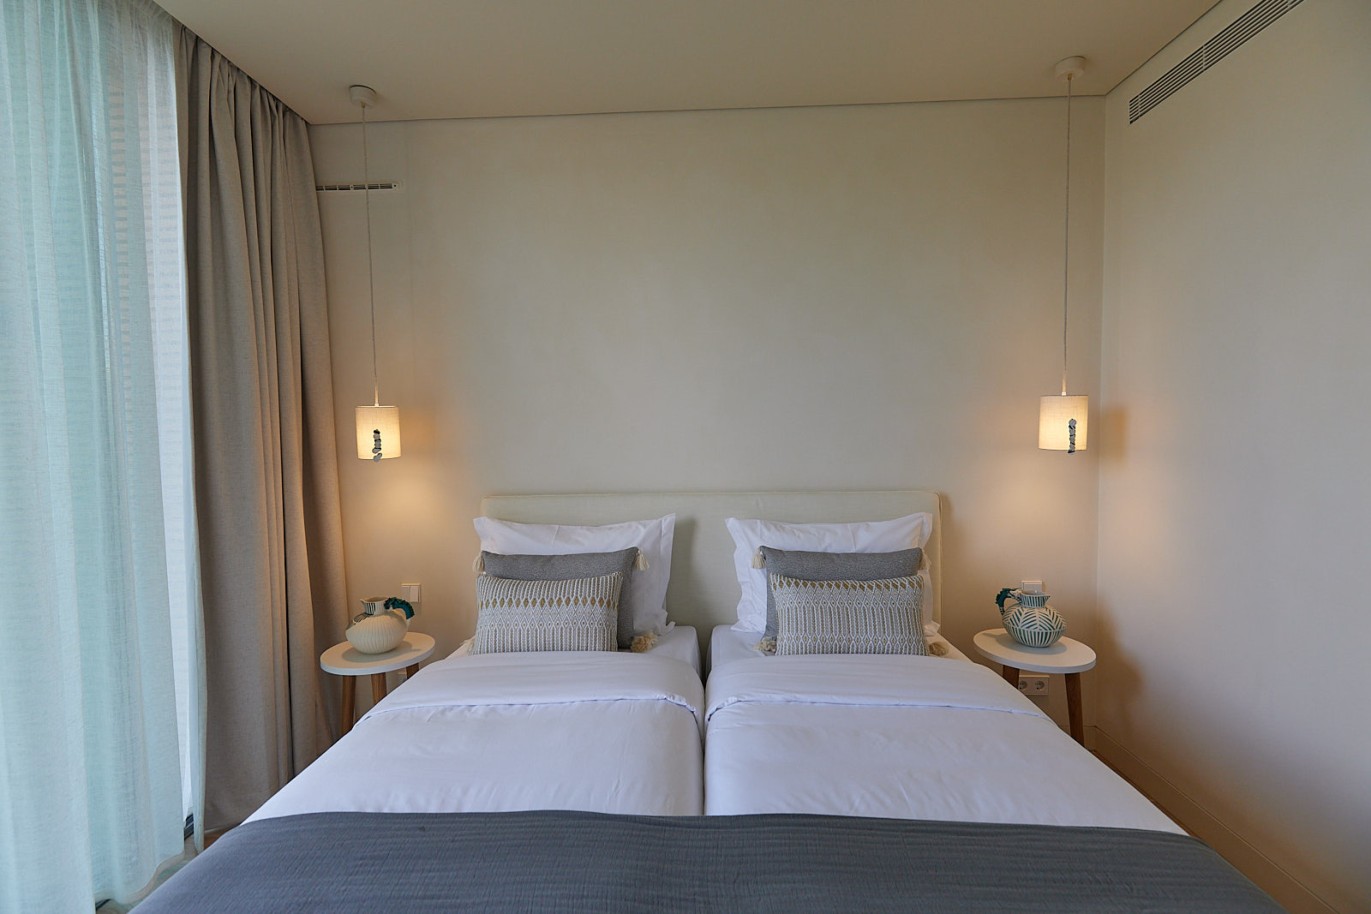 2 bedroom apartment in resort, for sale in Porches, Algarve_229153